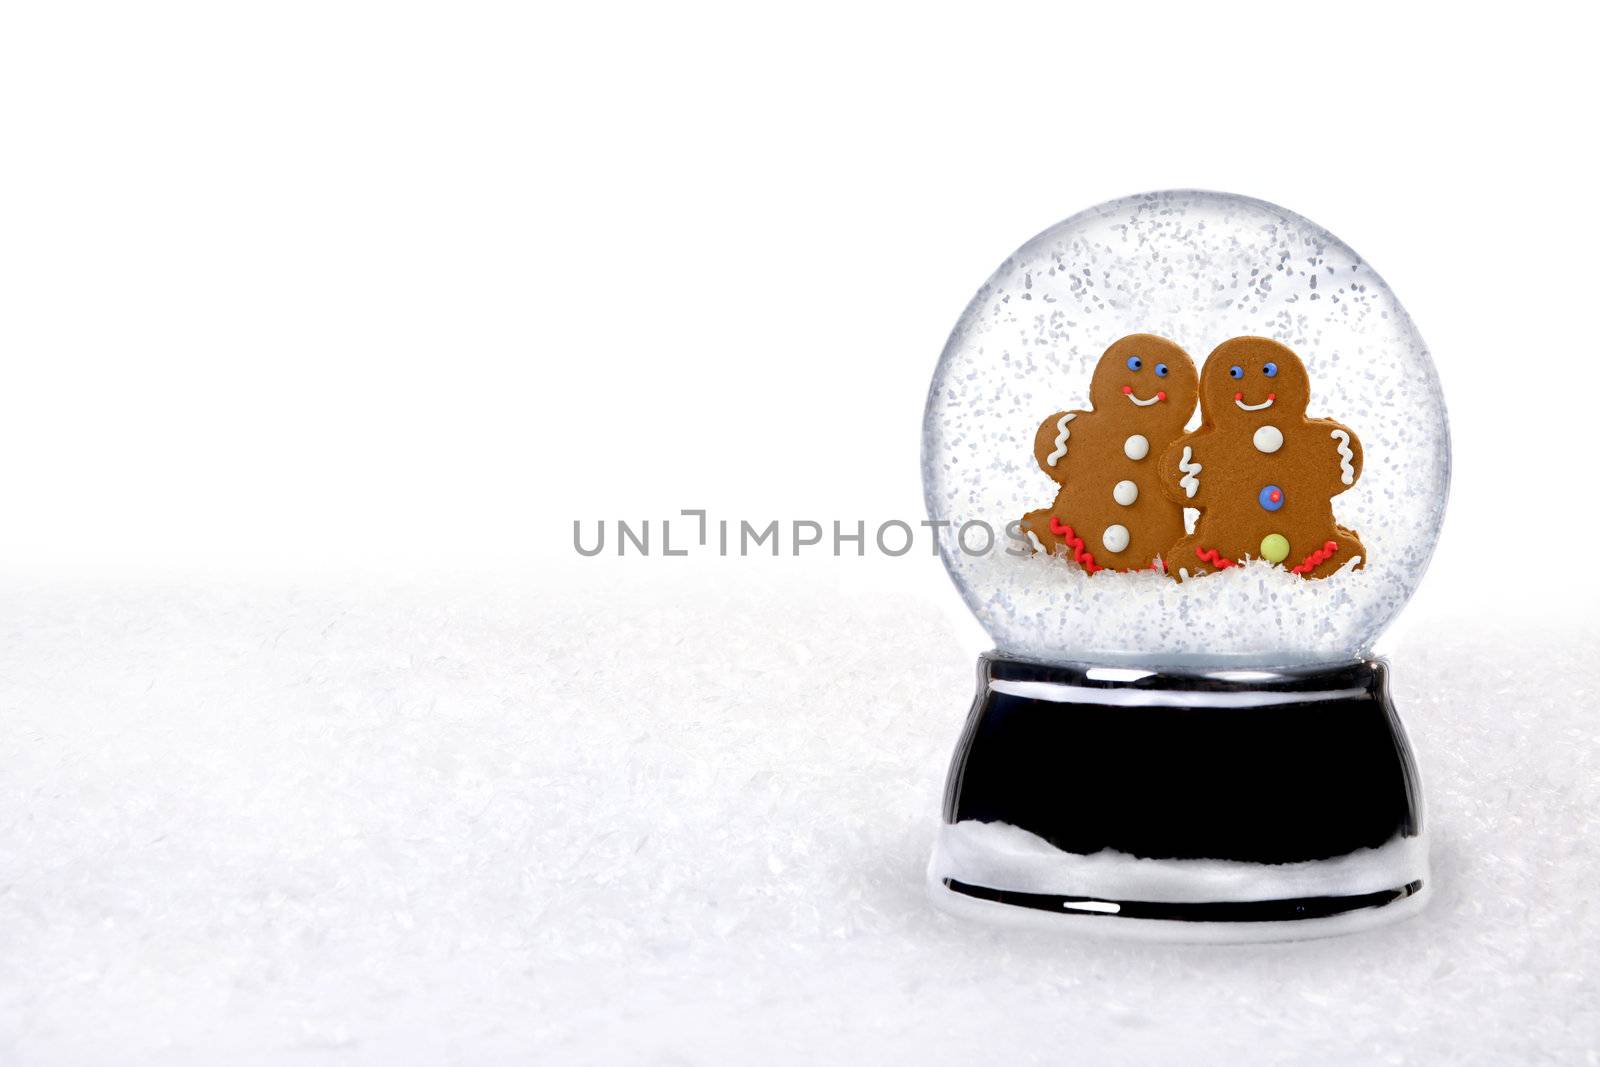 2 Happy Gingerbread People Inside a Snowglobe by tobkatrina